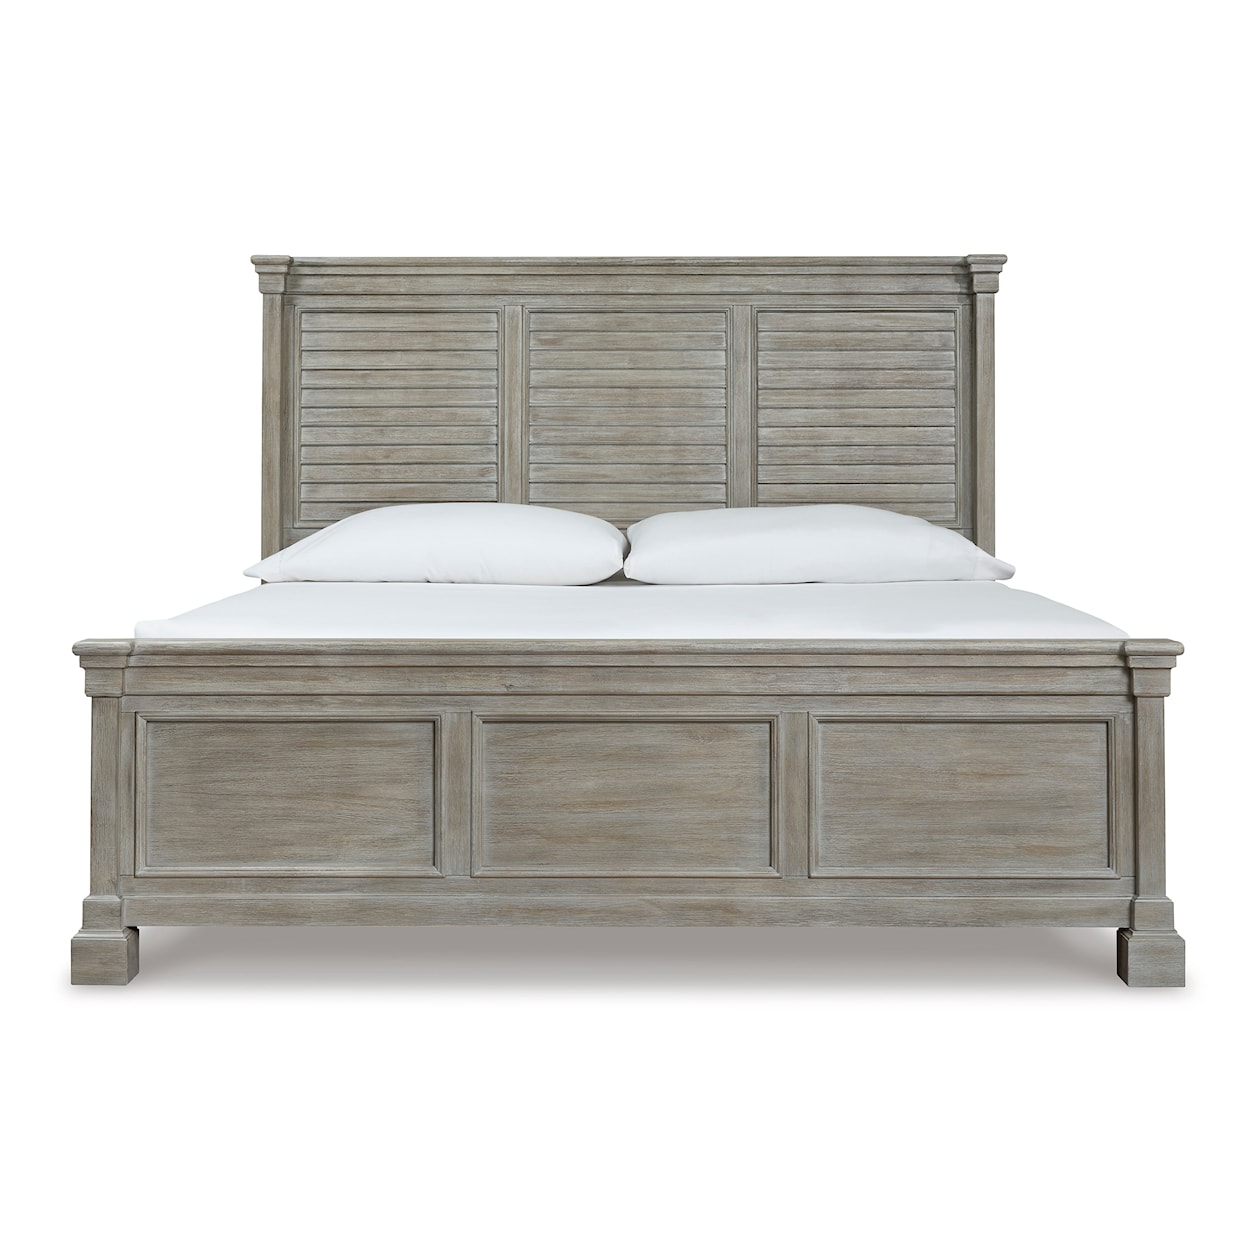 Ashley Furniture Signature Design Moreshire Queen Panel Bed